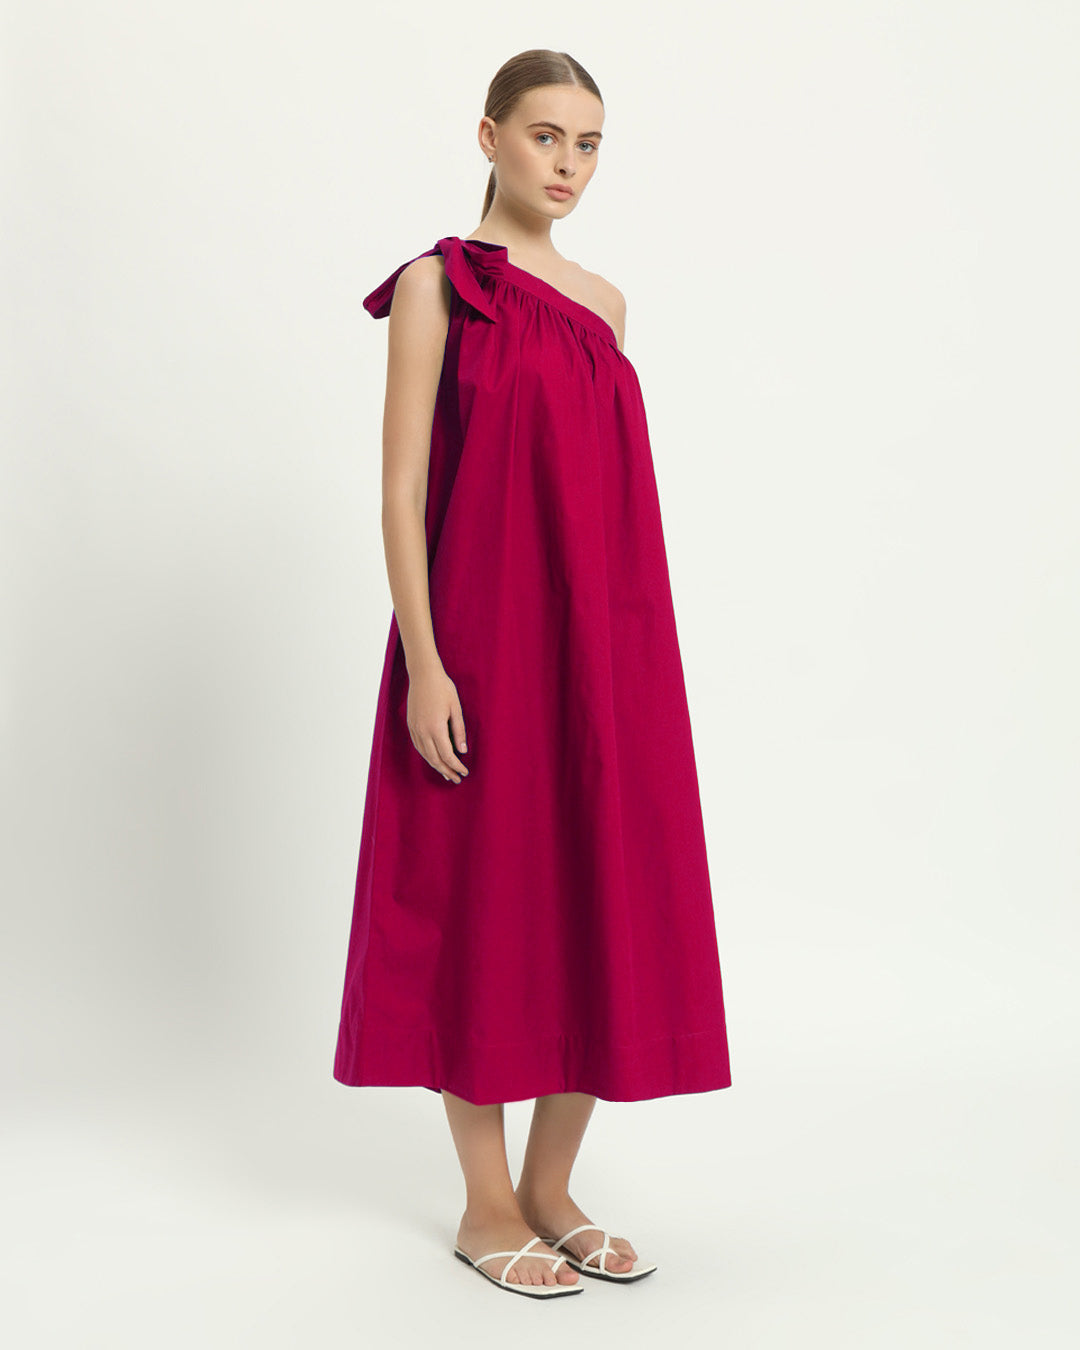 The Strehla Berry Cotton Dress